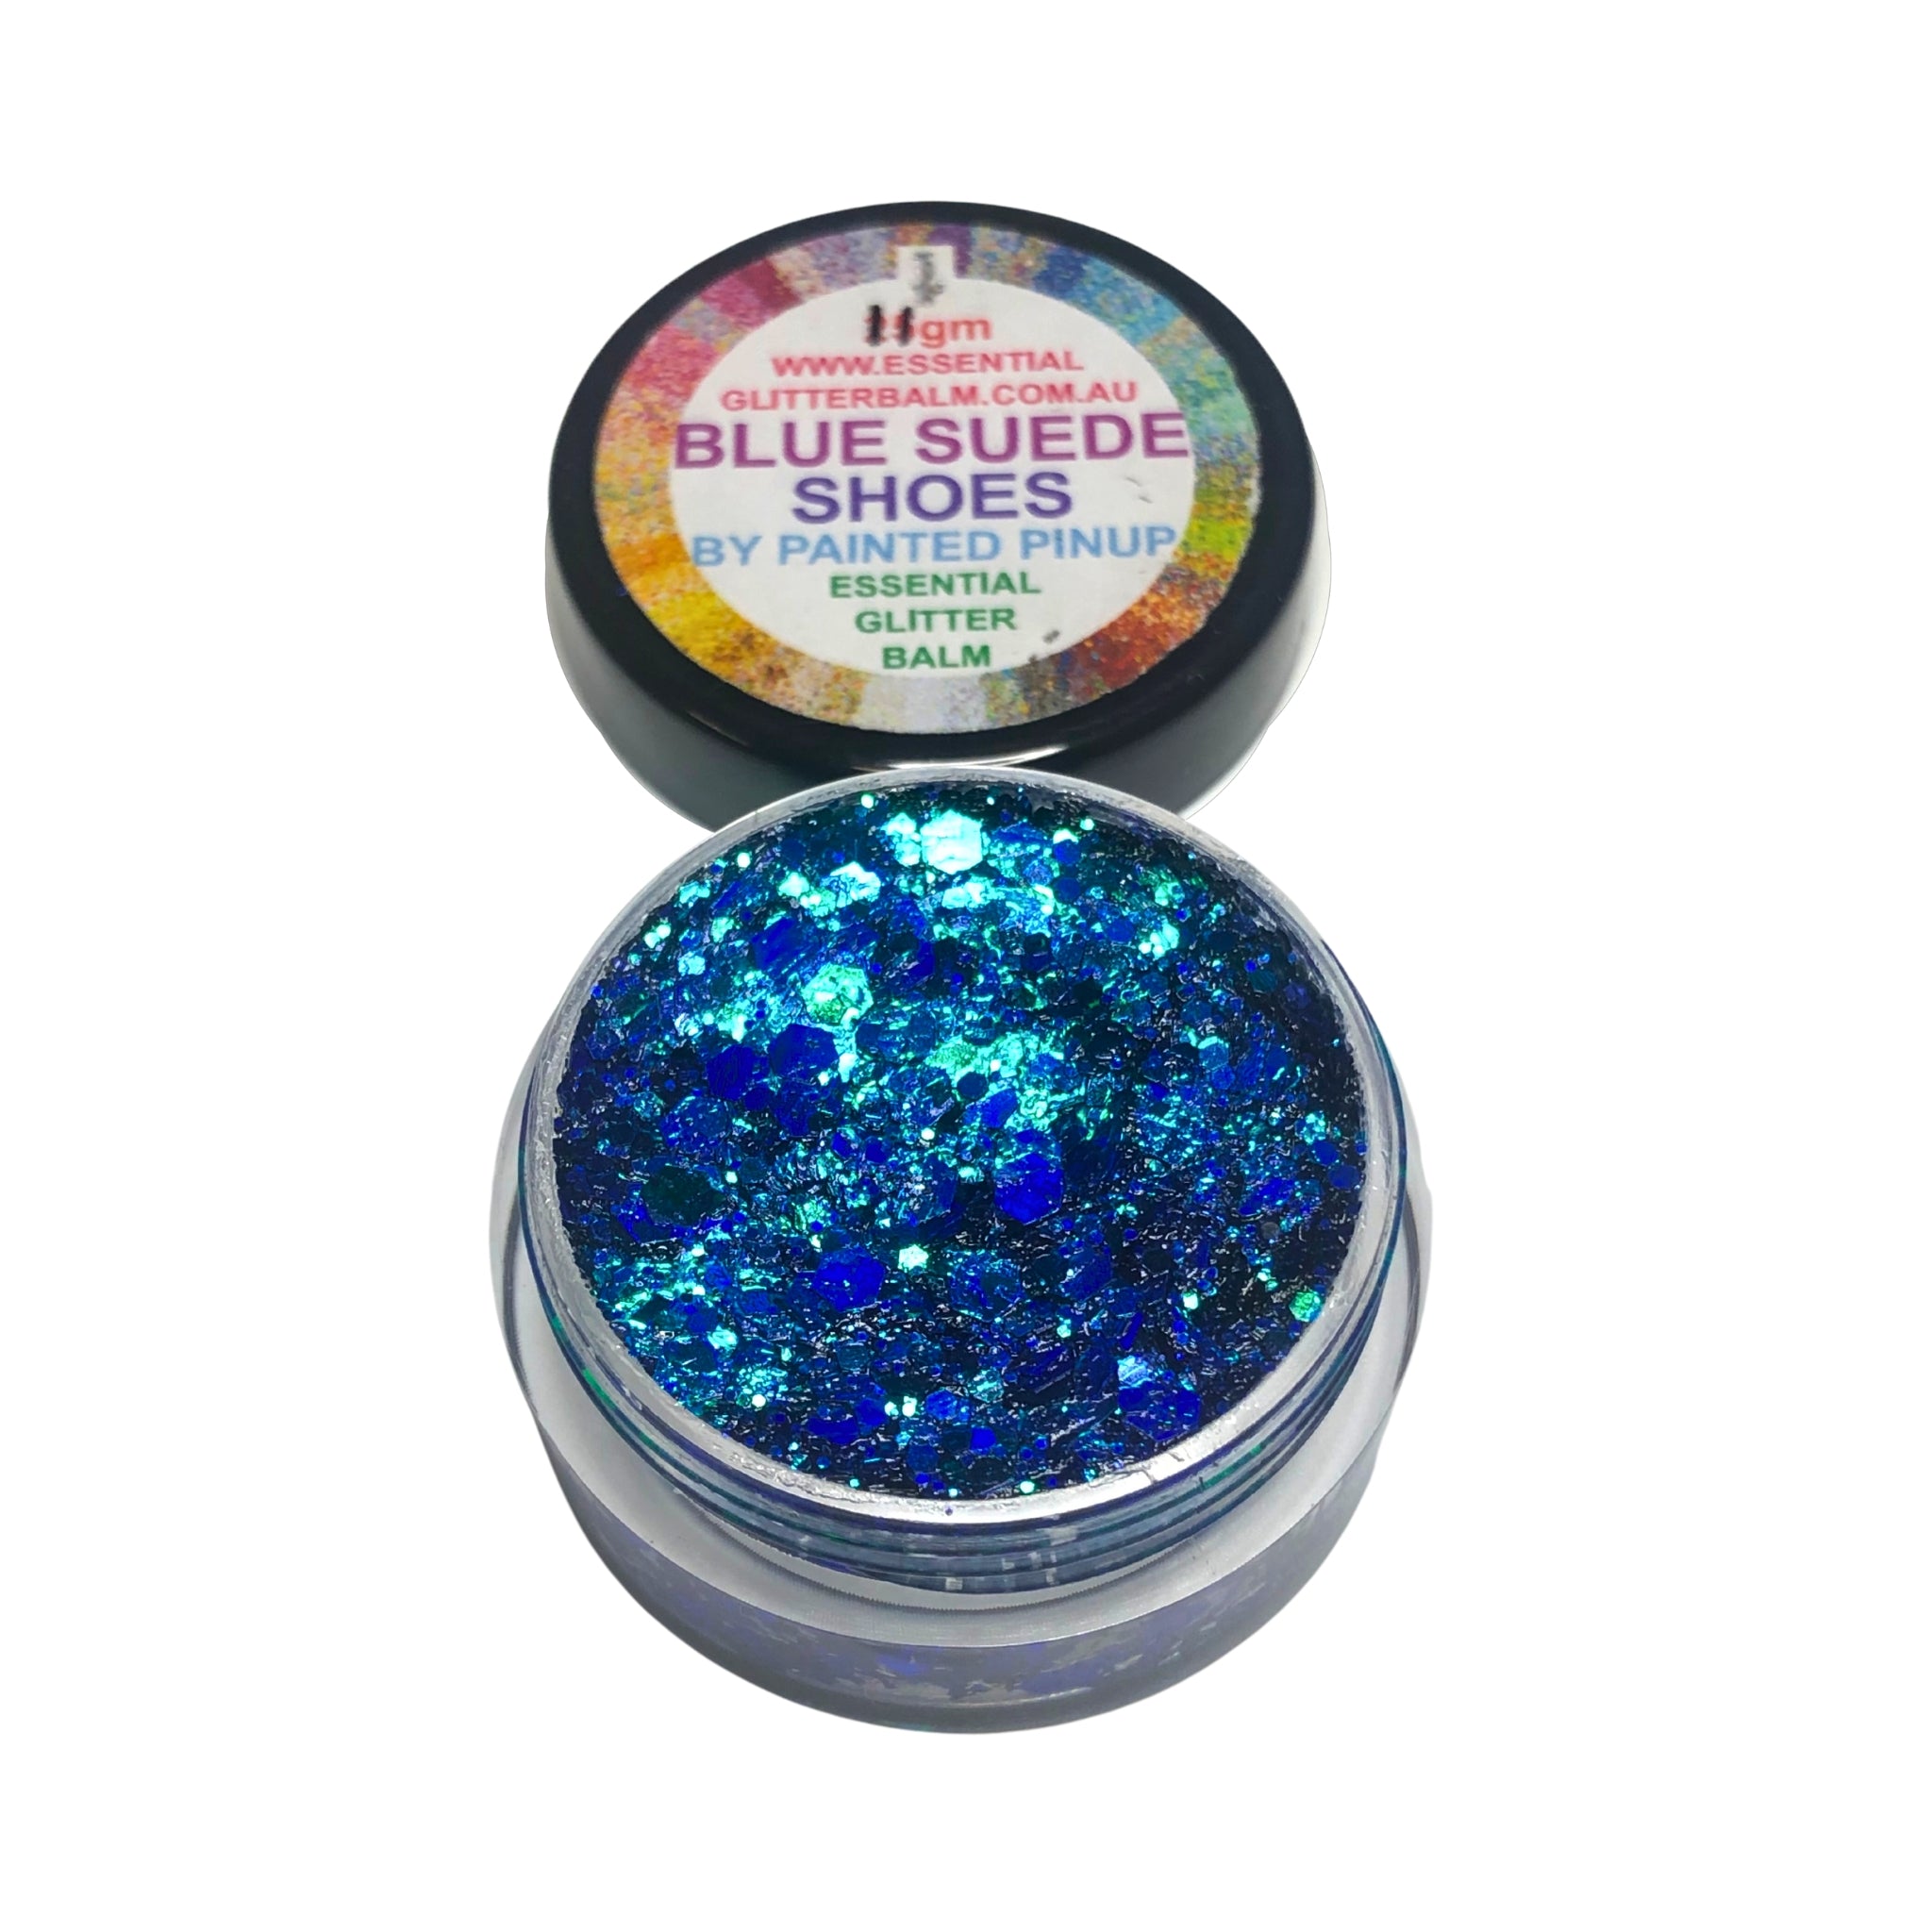 Essential Glitter Balm - BLUE SUEDE SHOES